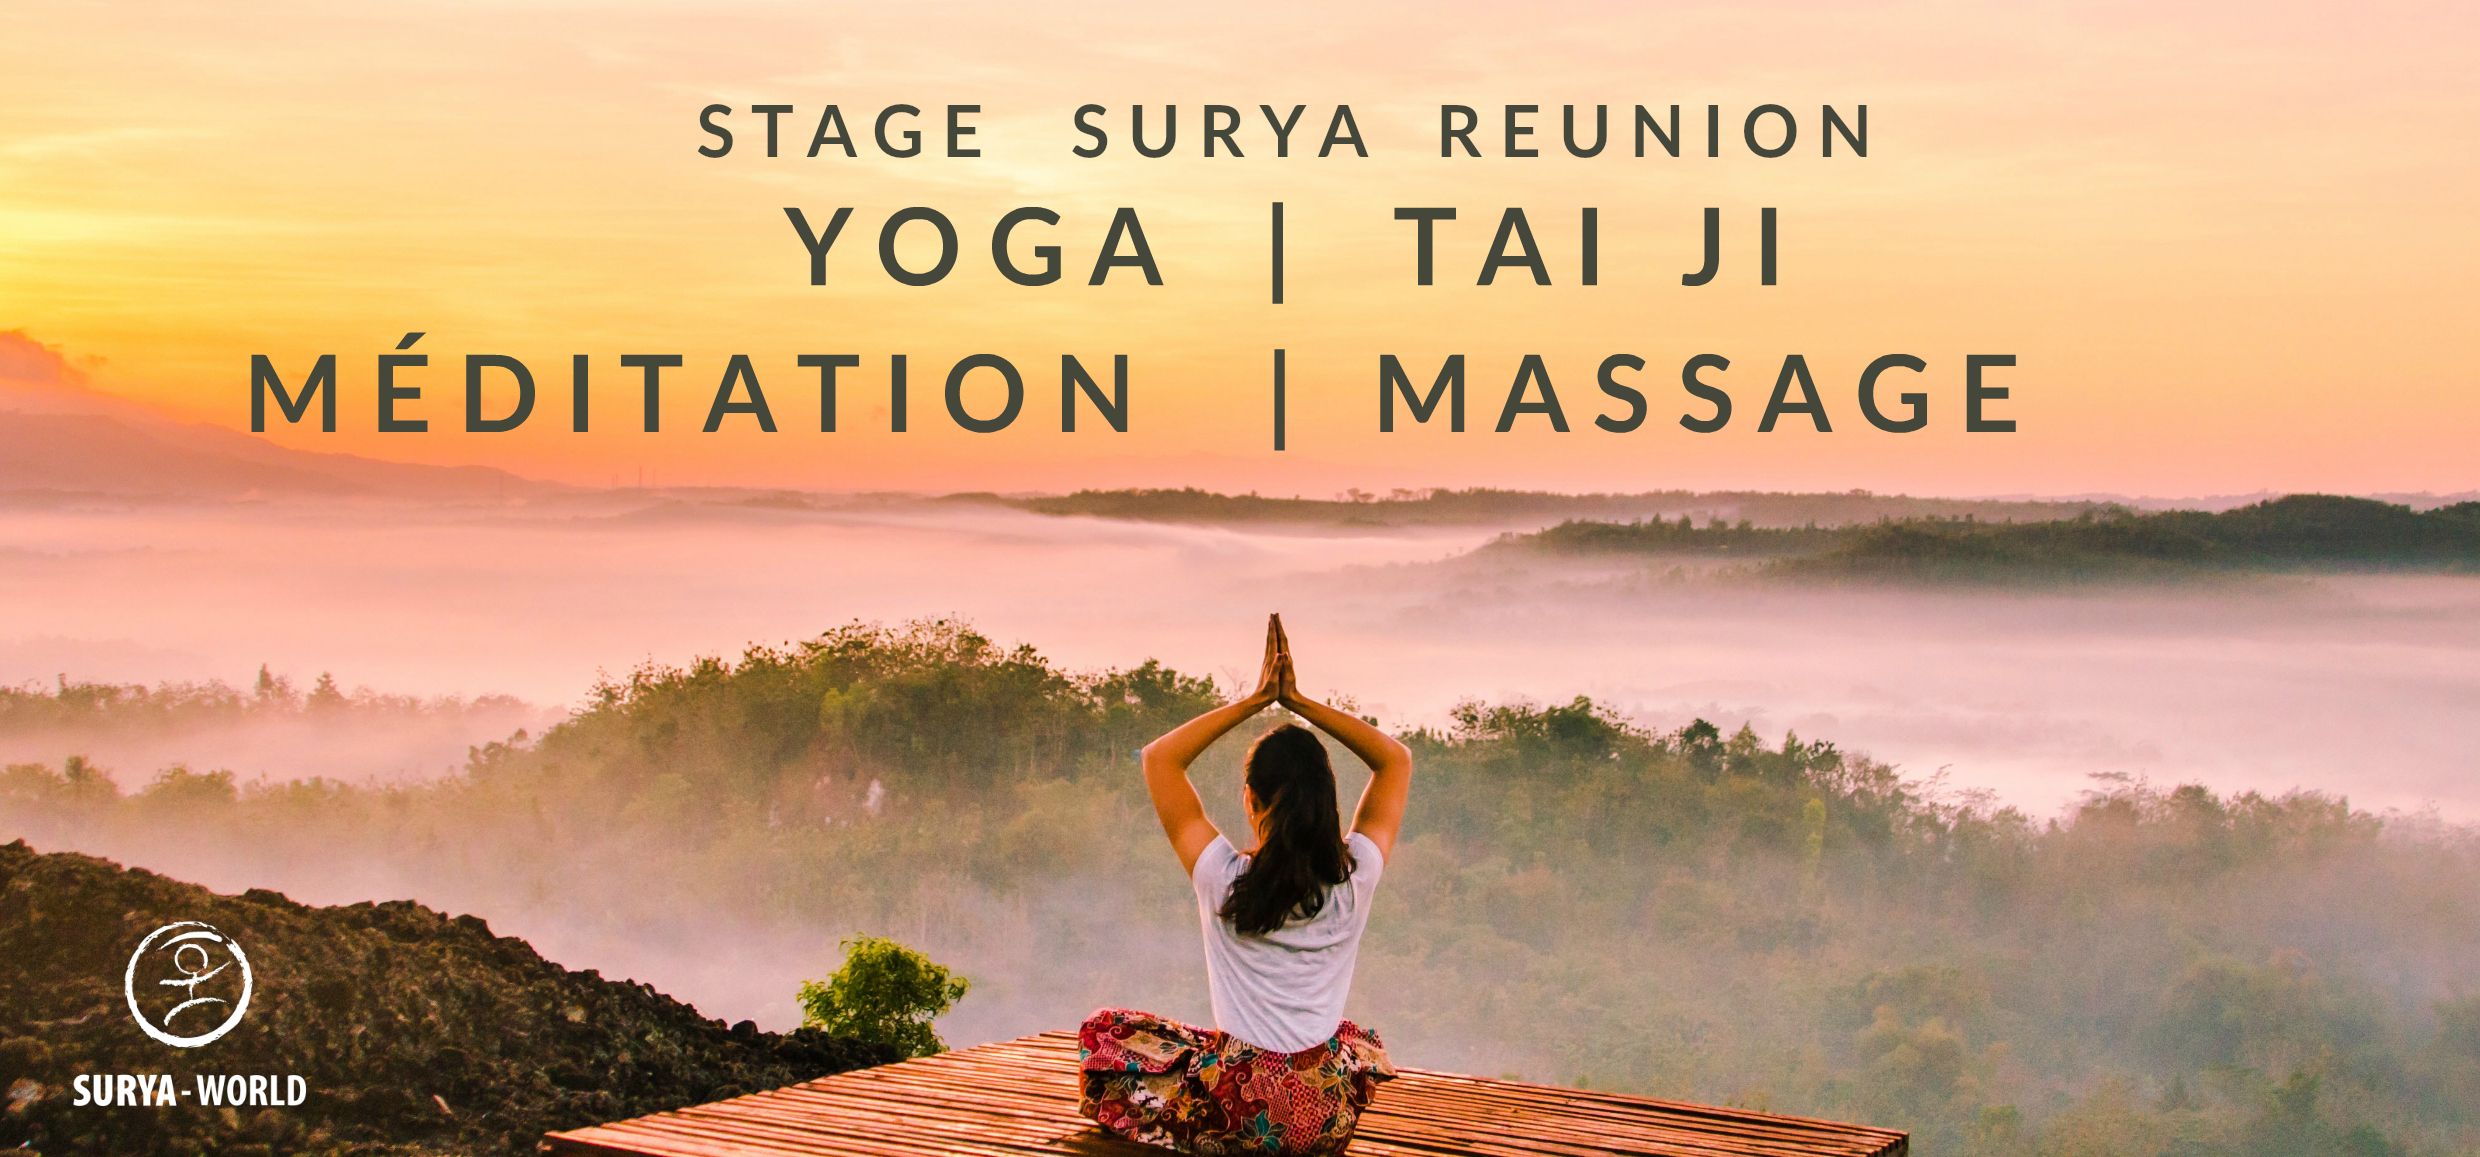 Reunion : Yoga, Taiji, Meditation...